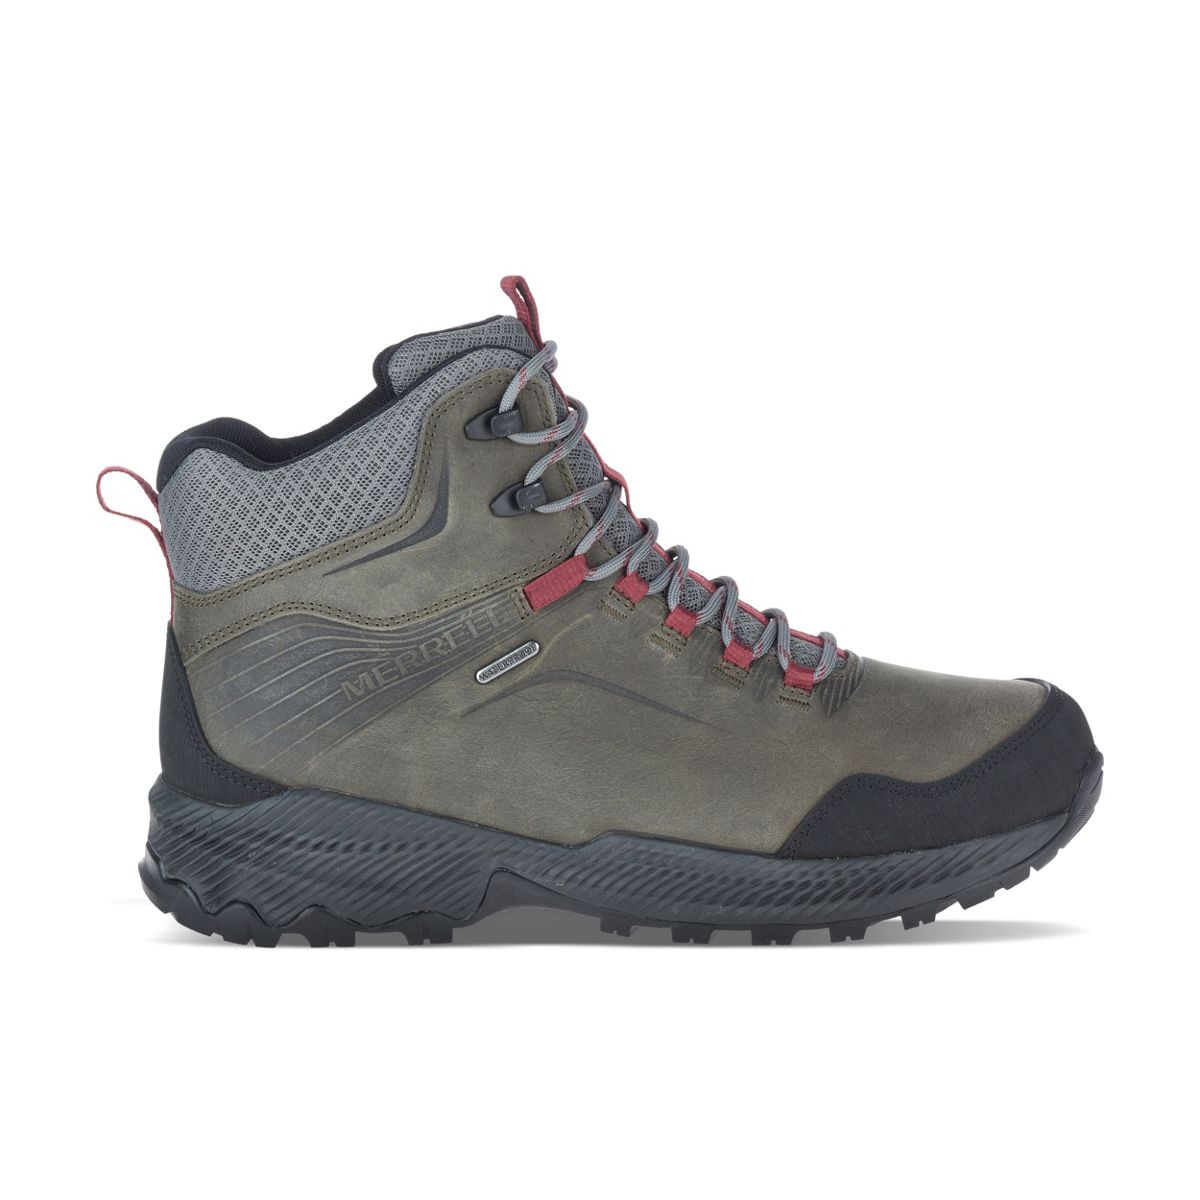 merrell waterproof hiking boots